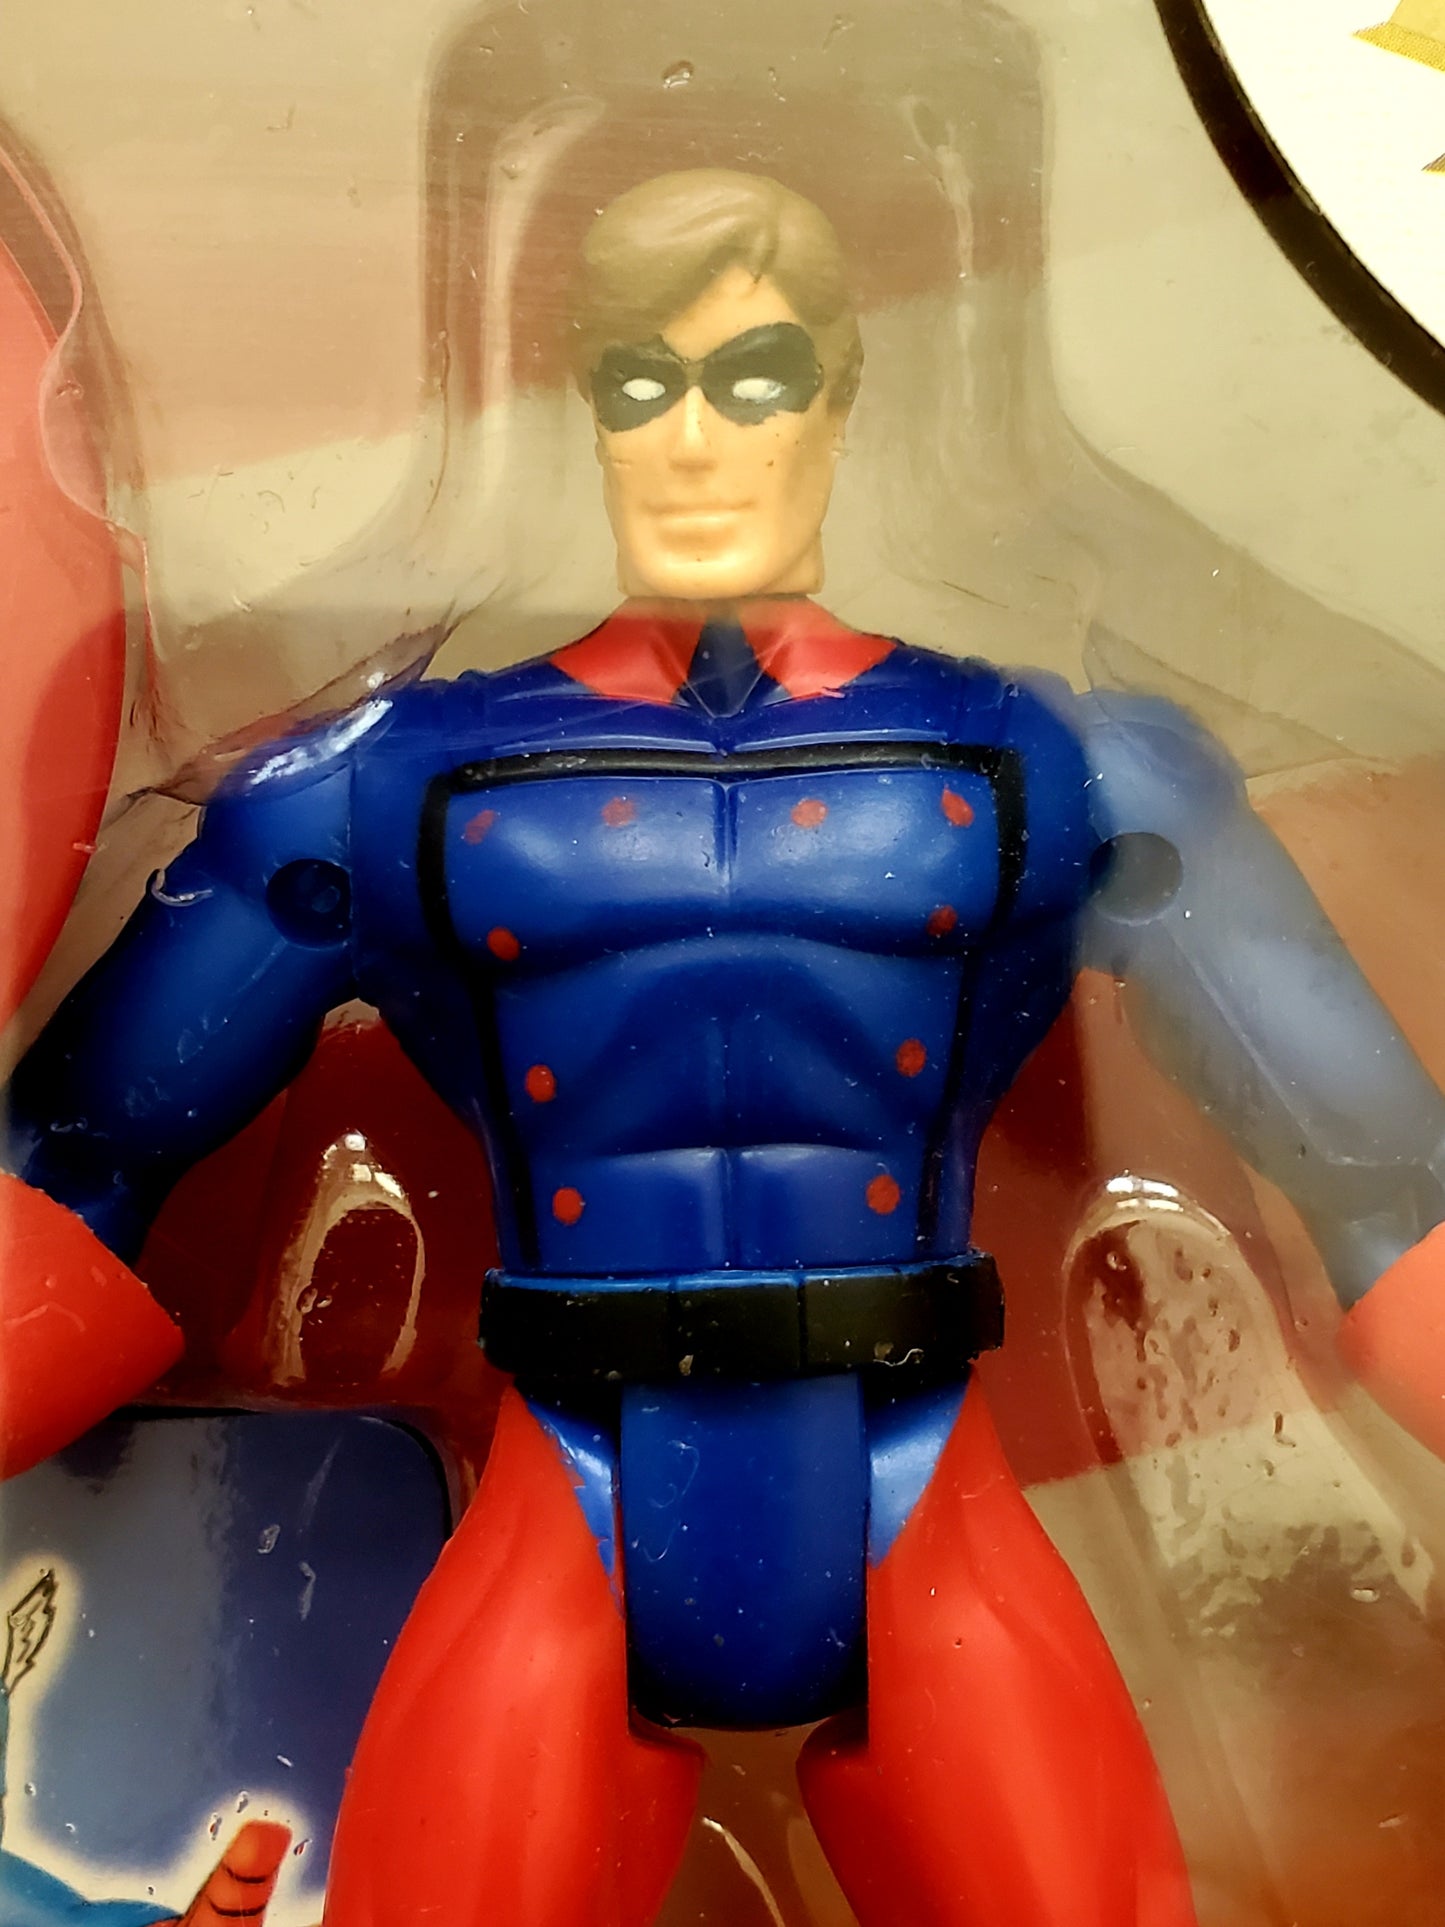 American Heroes Captain America & Bucky Action Figure Set